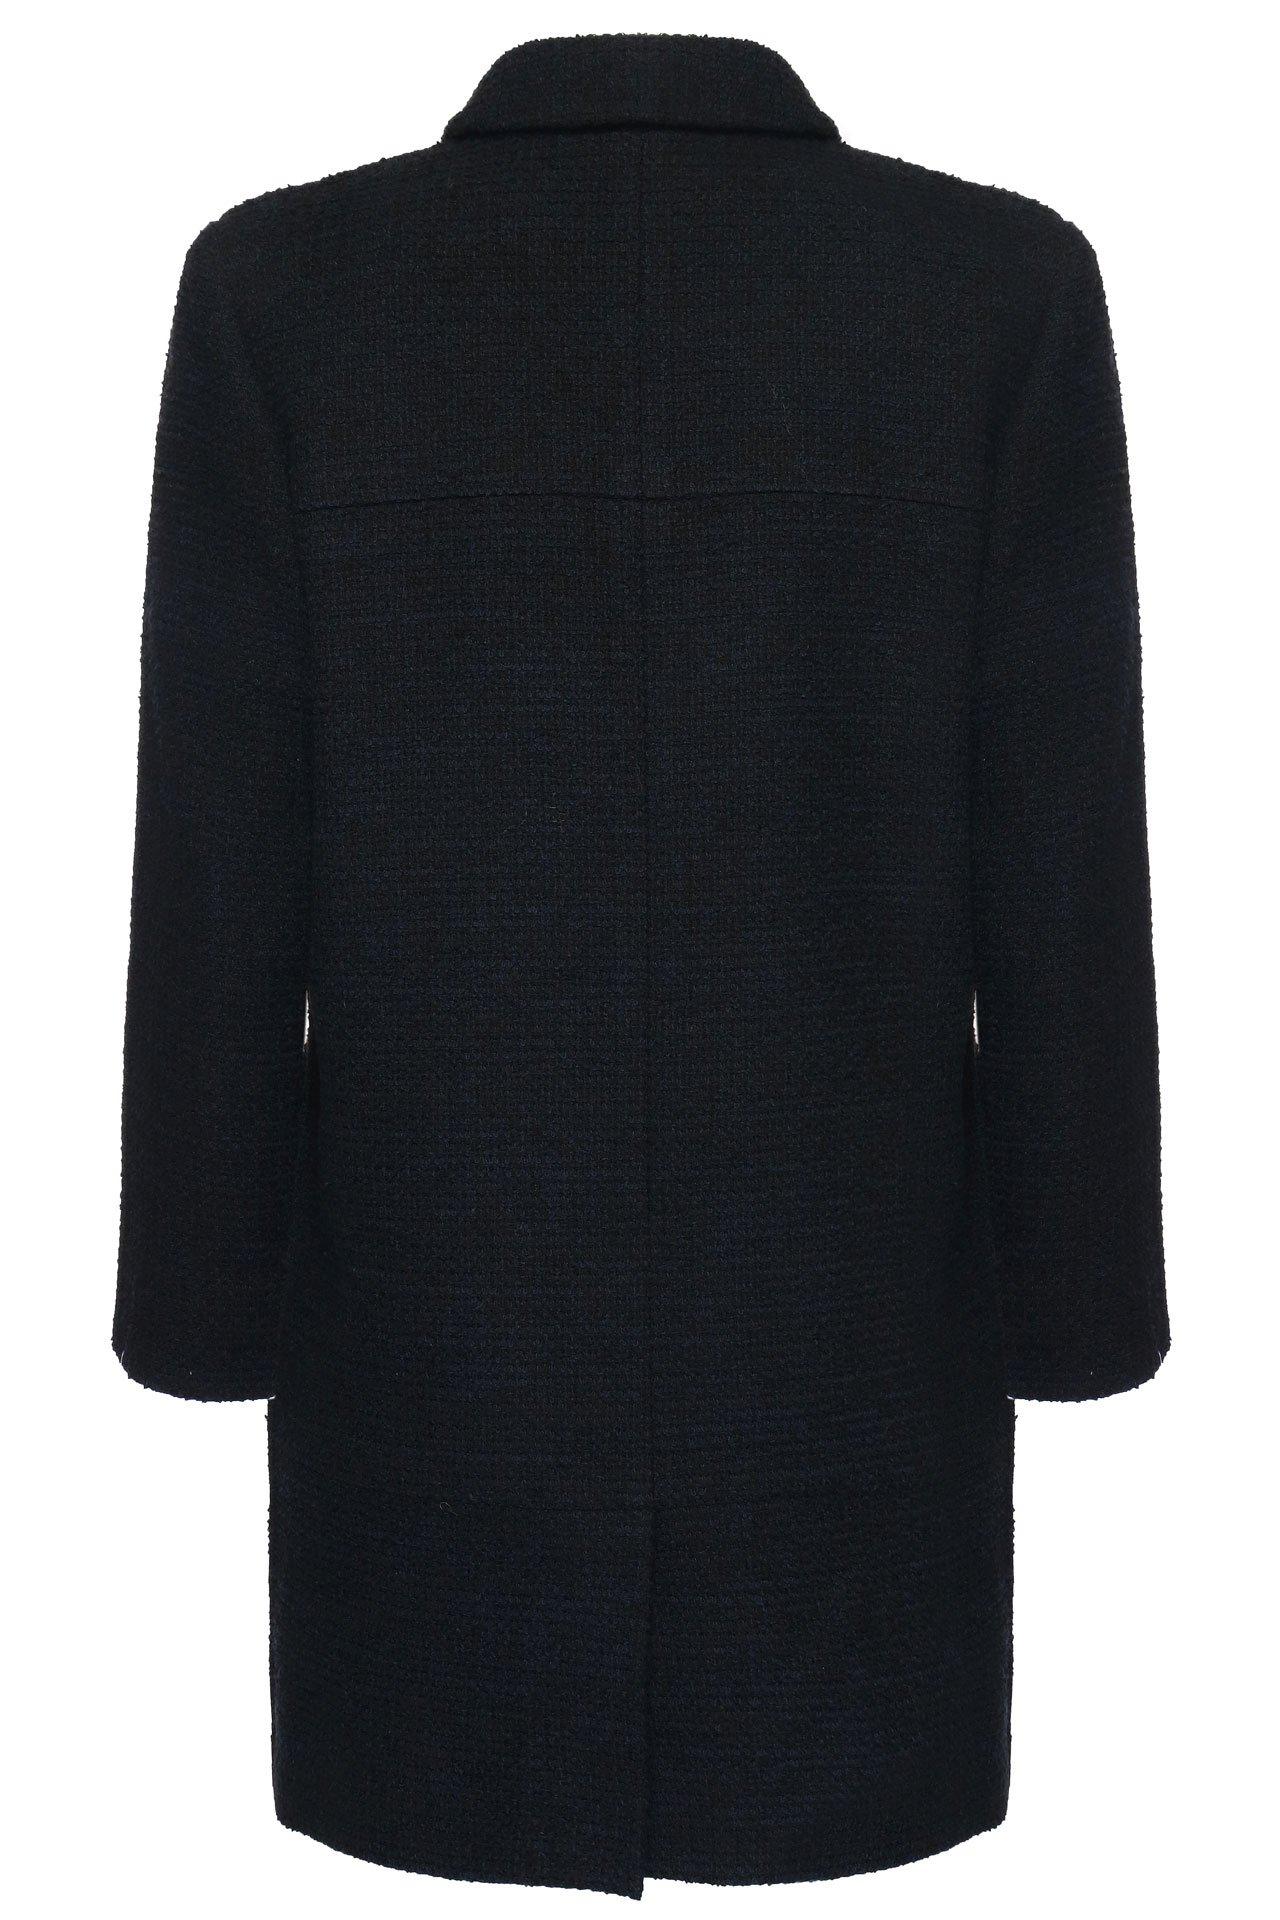 Chanel New CC Knöpfe Tweed Jacke im Angebot 2